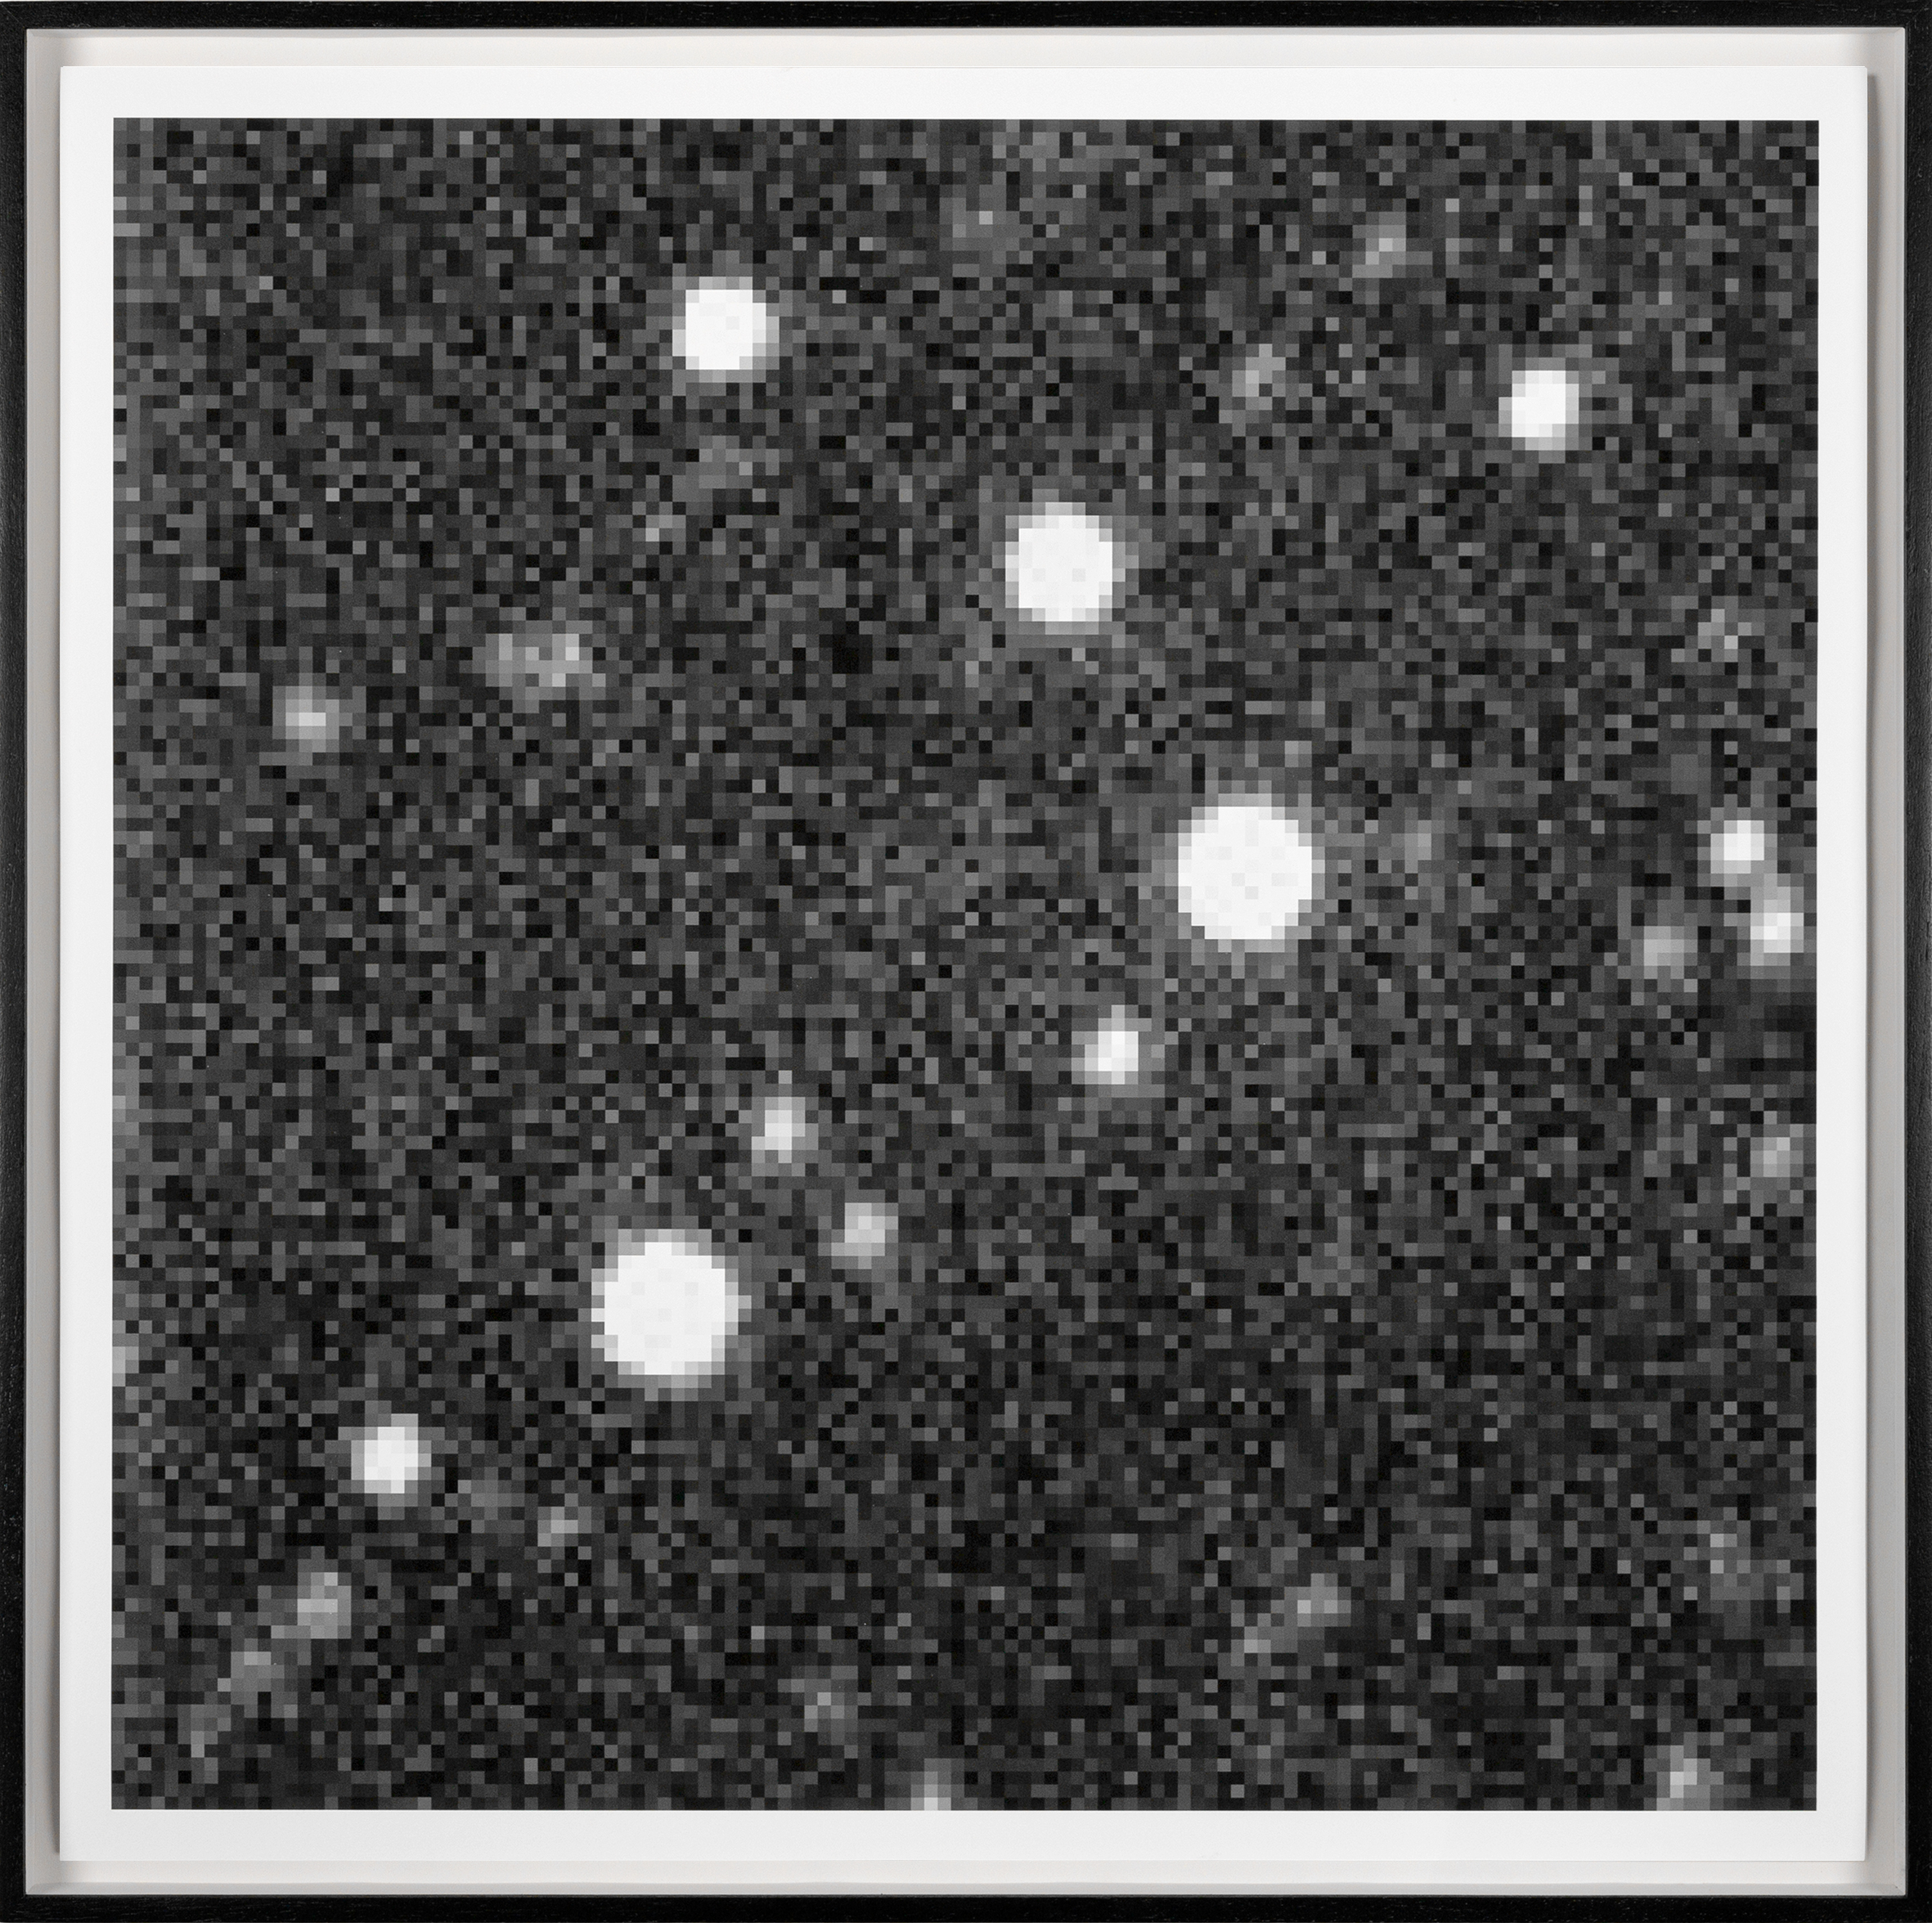 Occultation (Pluto), 2018, Telescopic image on hahnemuhle paper, 69cm x 69cm